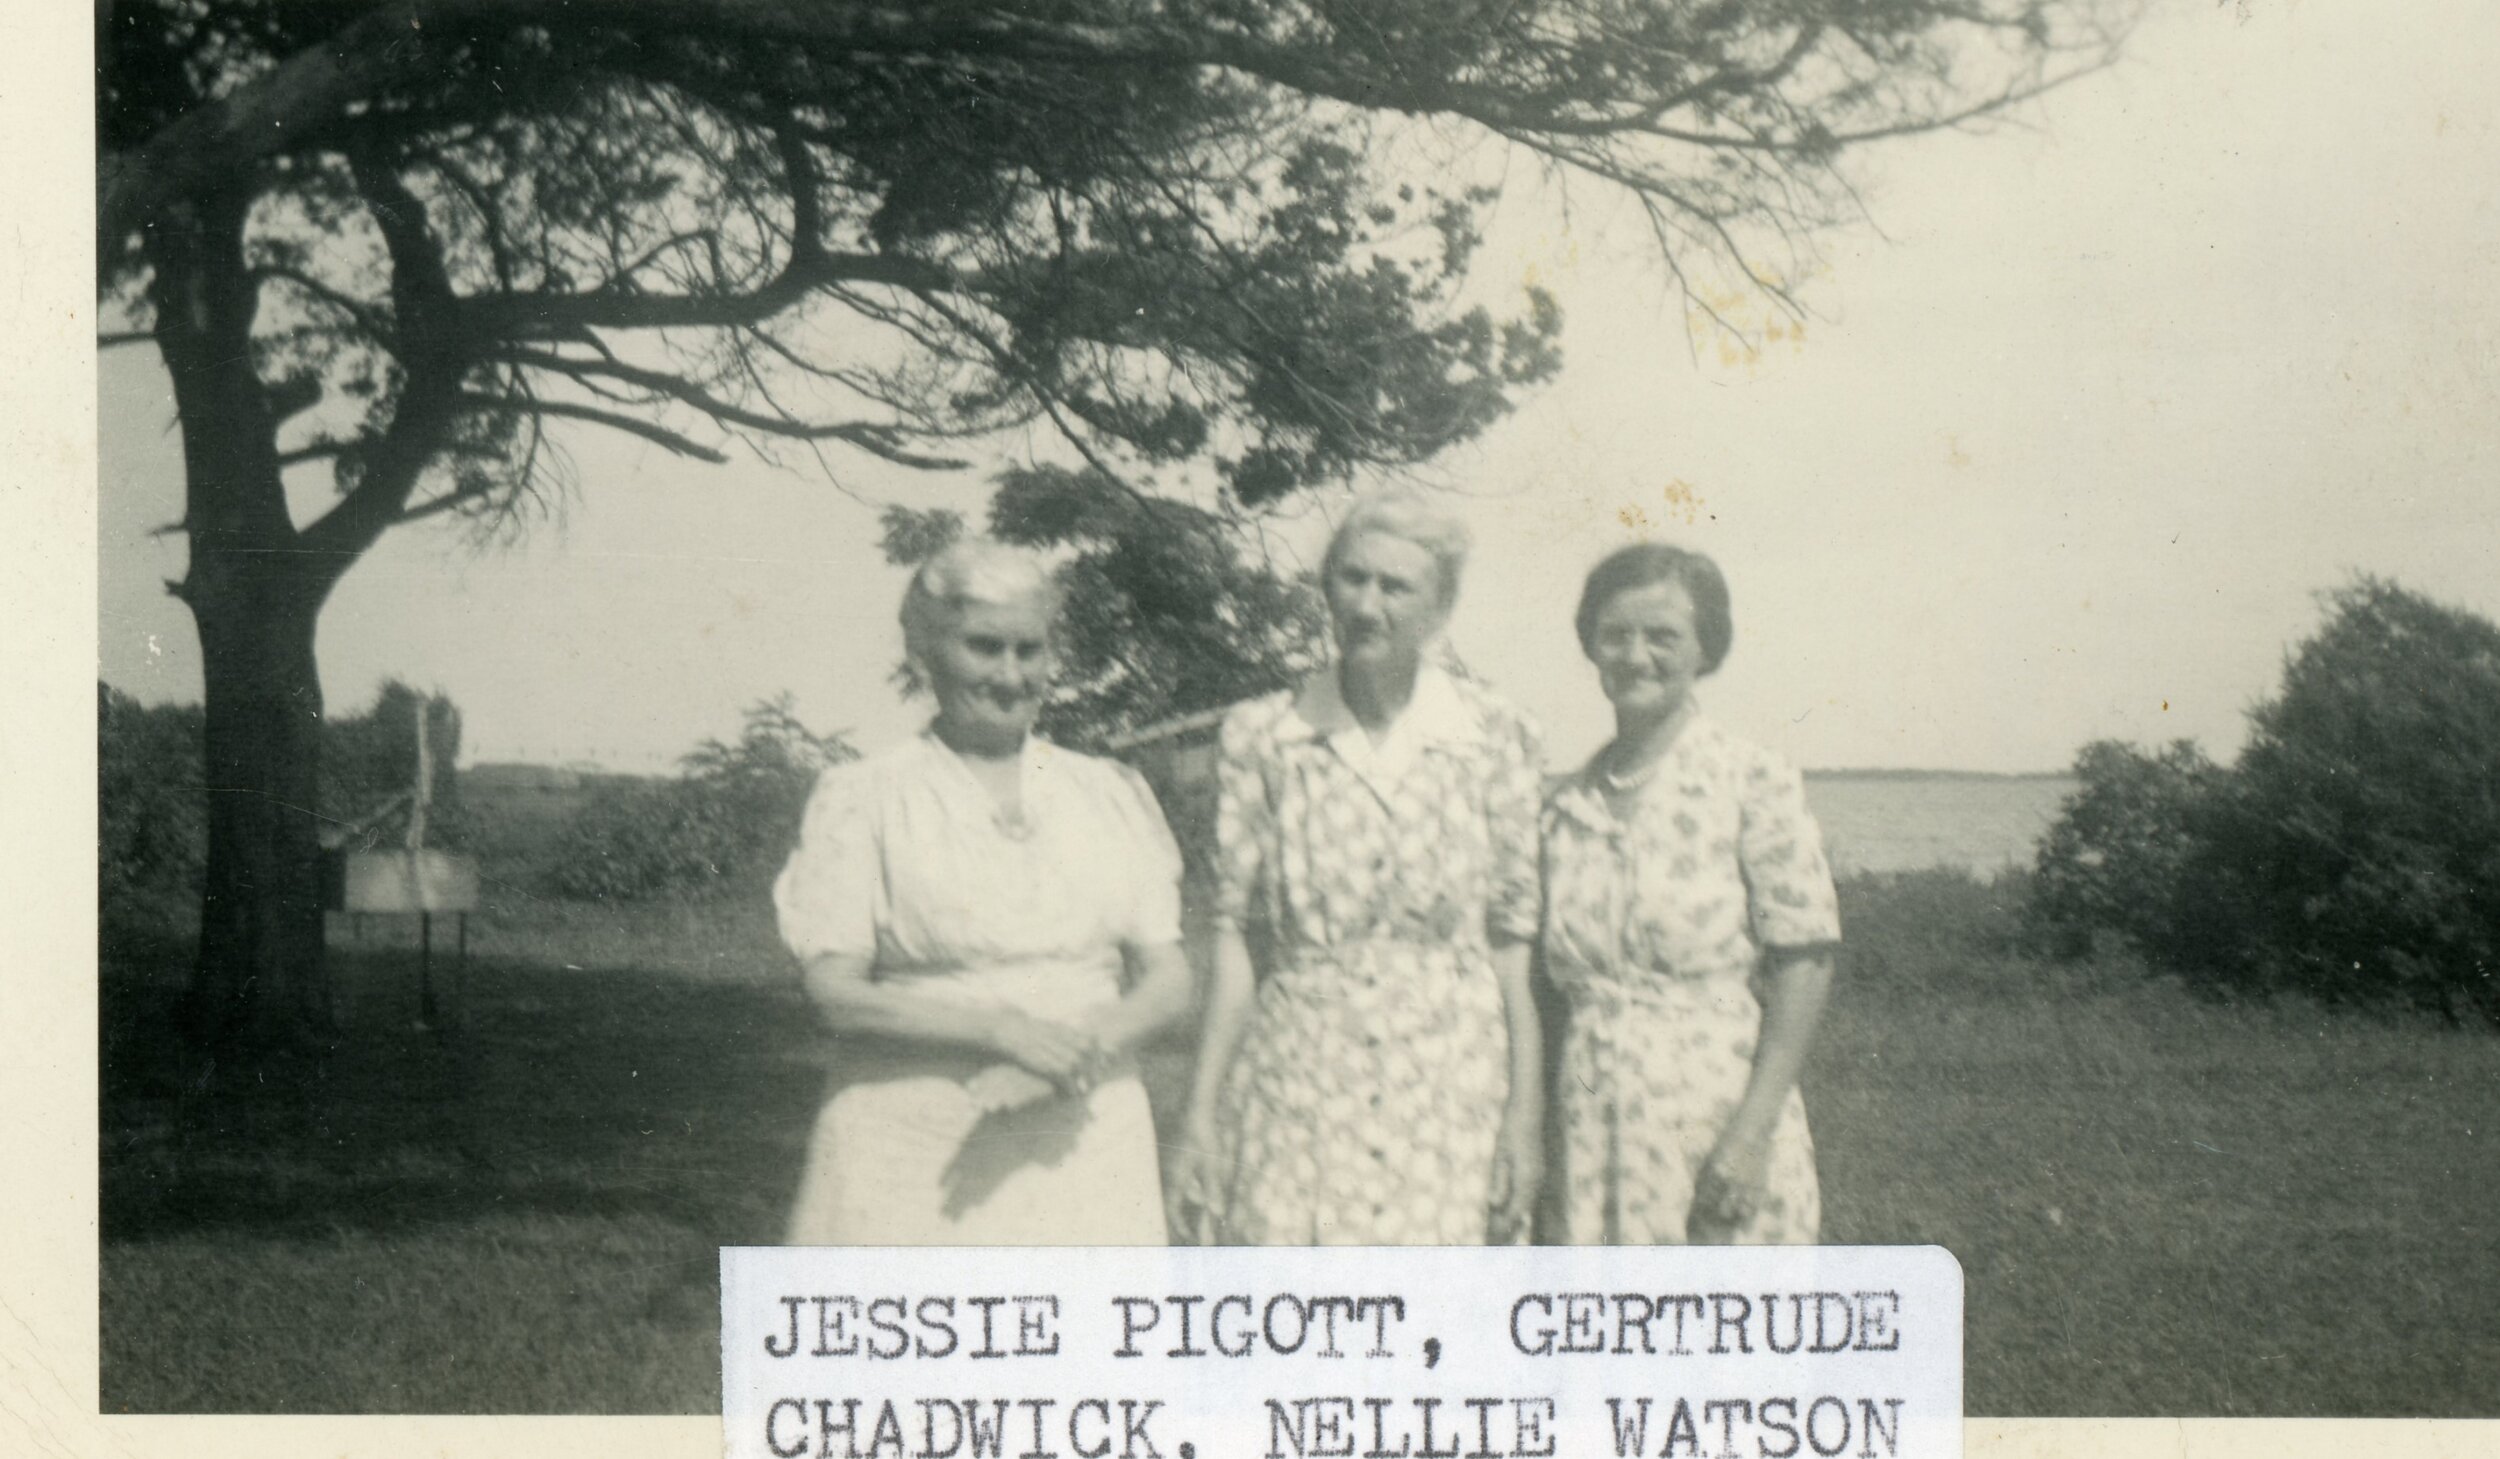 Jessie Pigott (sister of Ethel Pigott Lewis–Ethel mother of Dorothy Lewis), Gertrude Chadwick, Nellie Watson